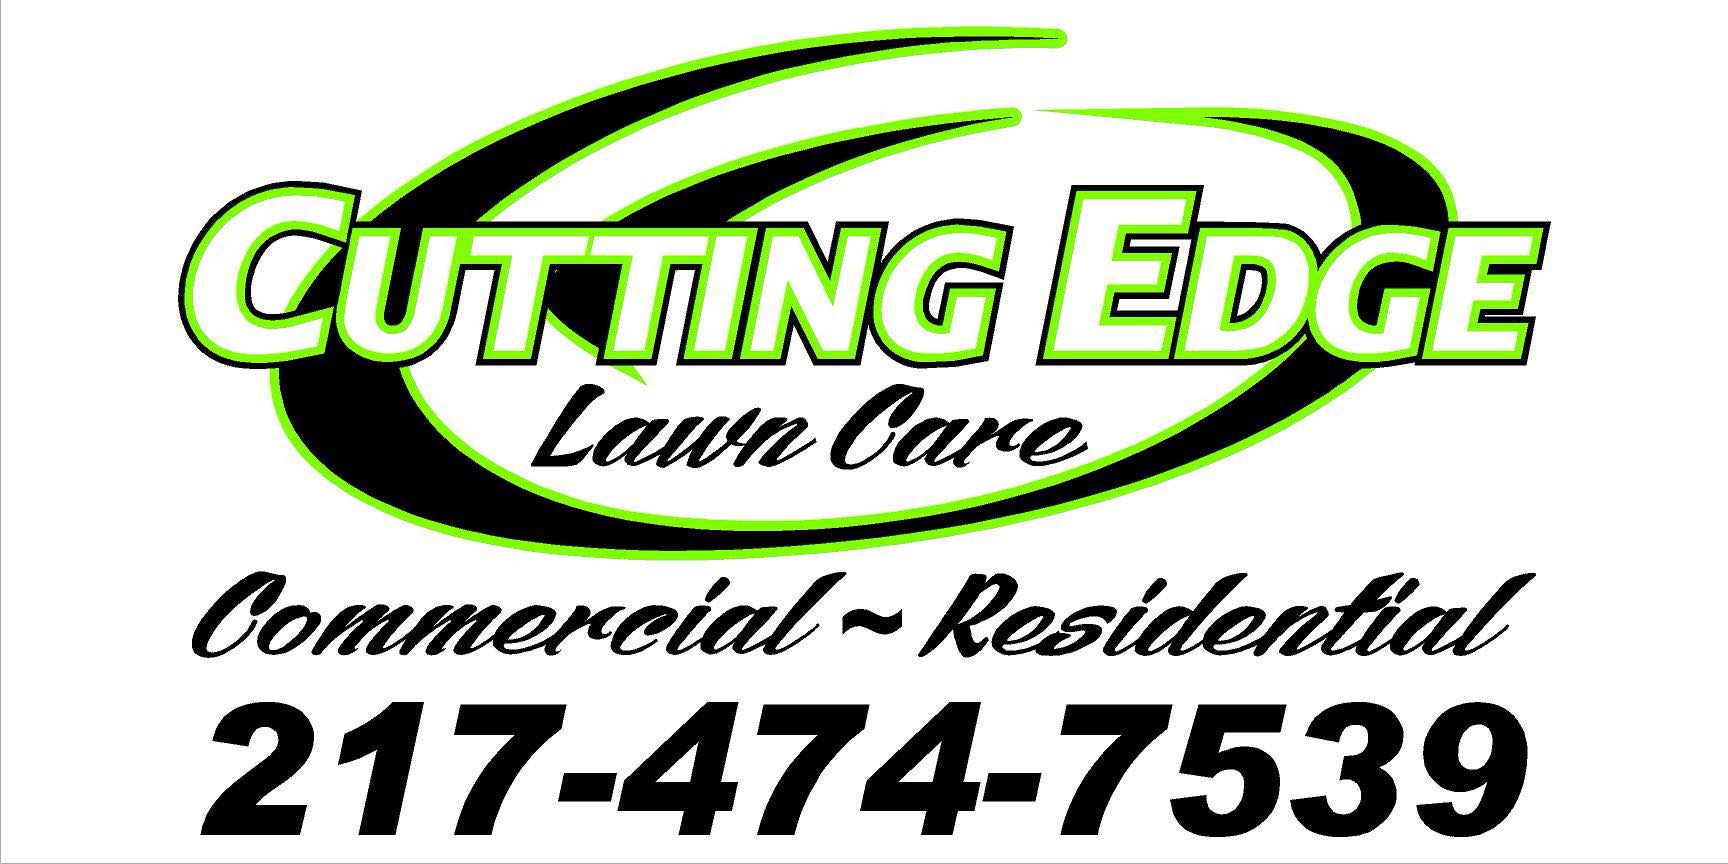 Cutting Edge Lawn Care of Danville